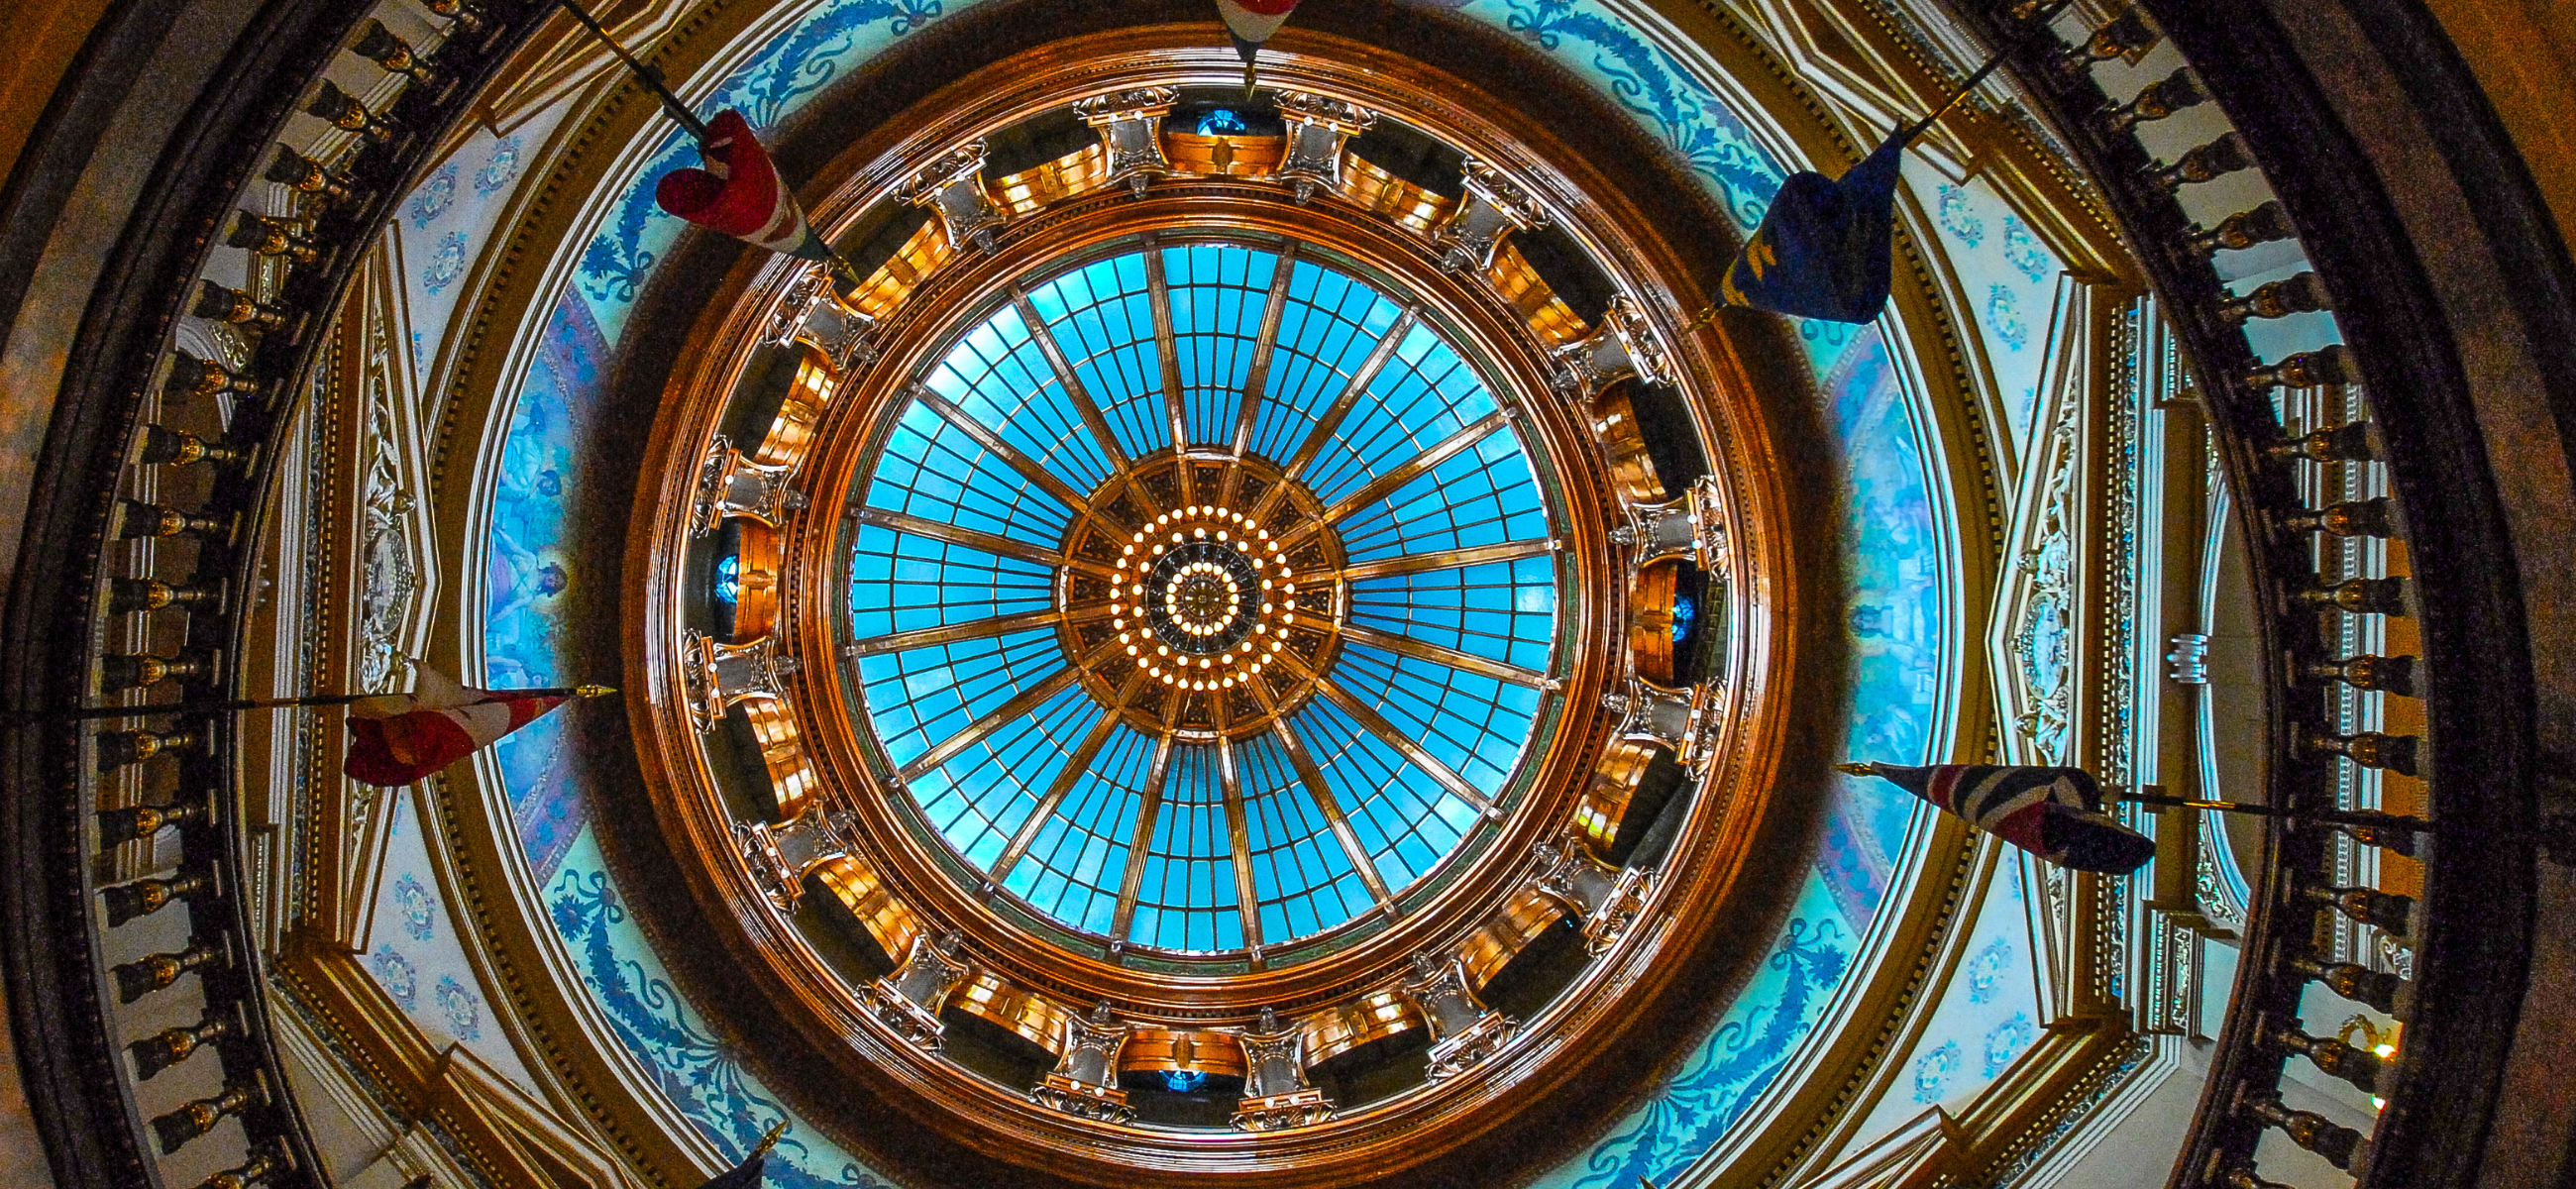 Inside the Kansas capitol dome.